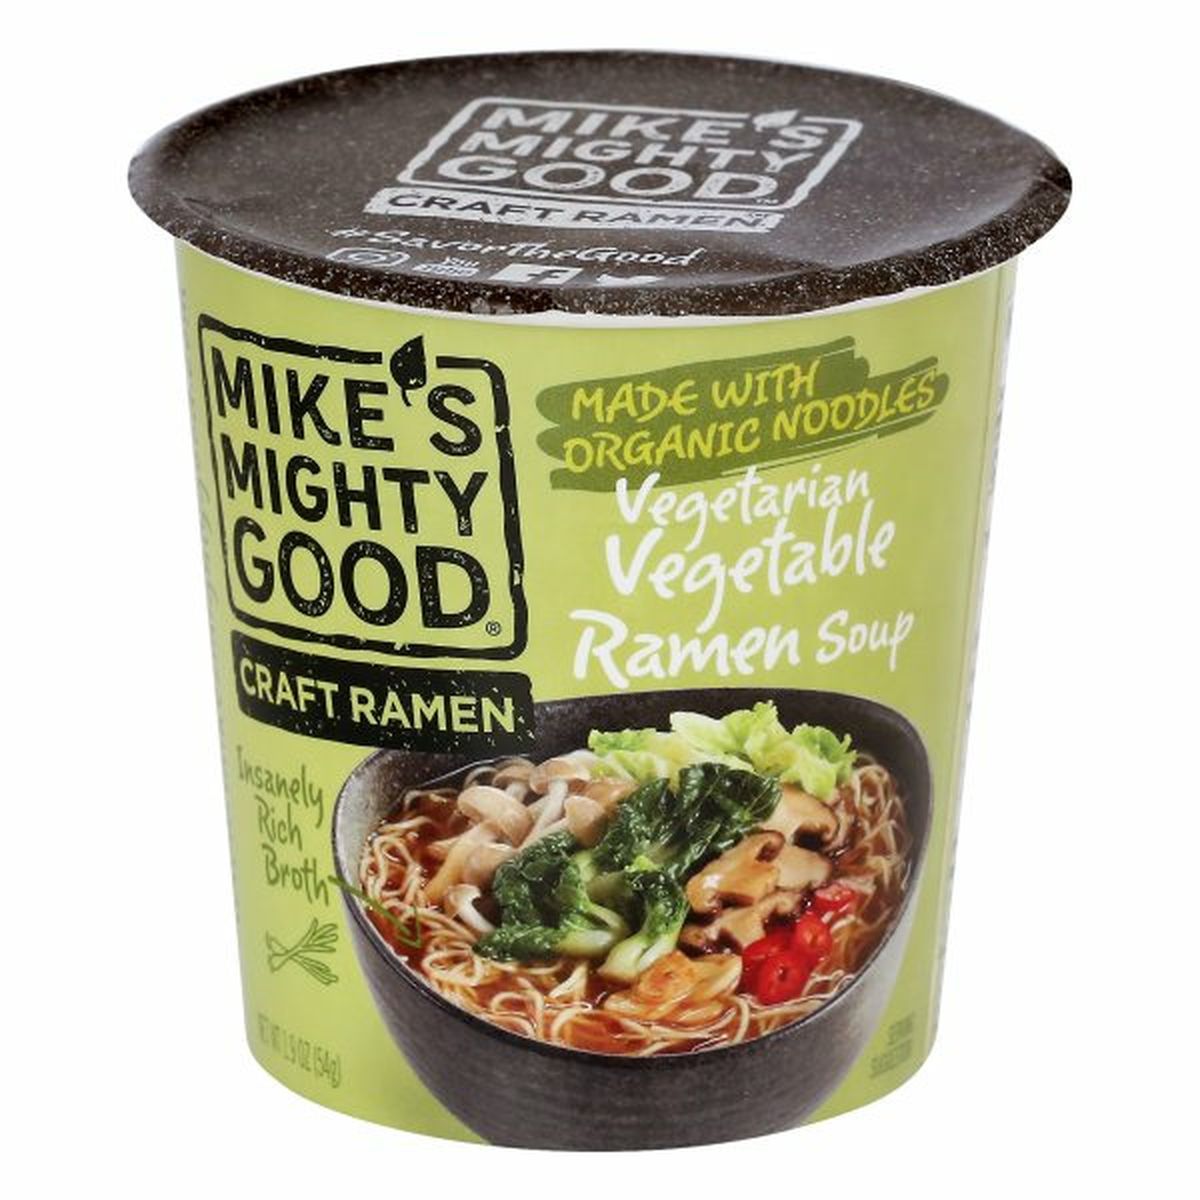 Calories in Mike's Mighty Good Ramen Soup, Vegetarian Vegetable